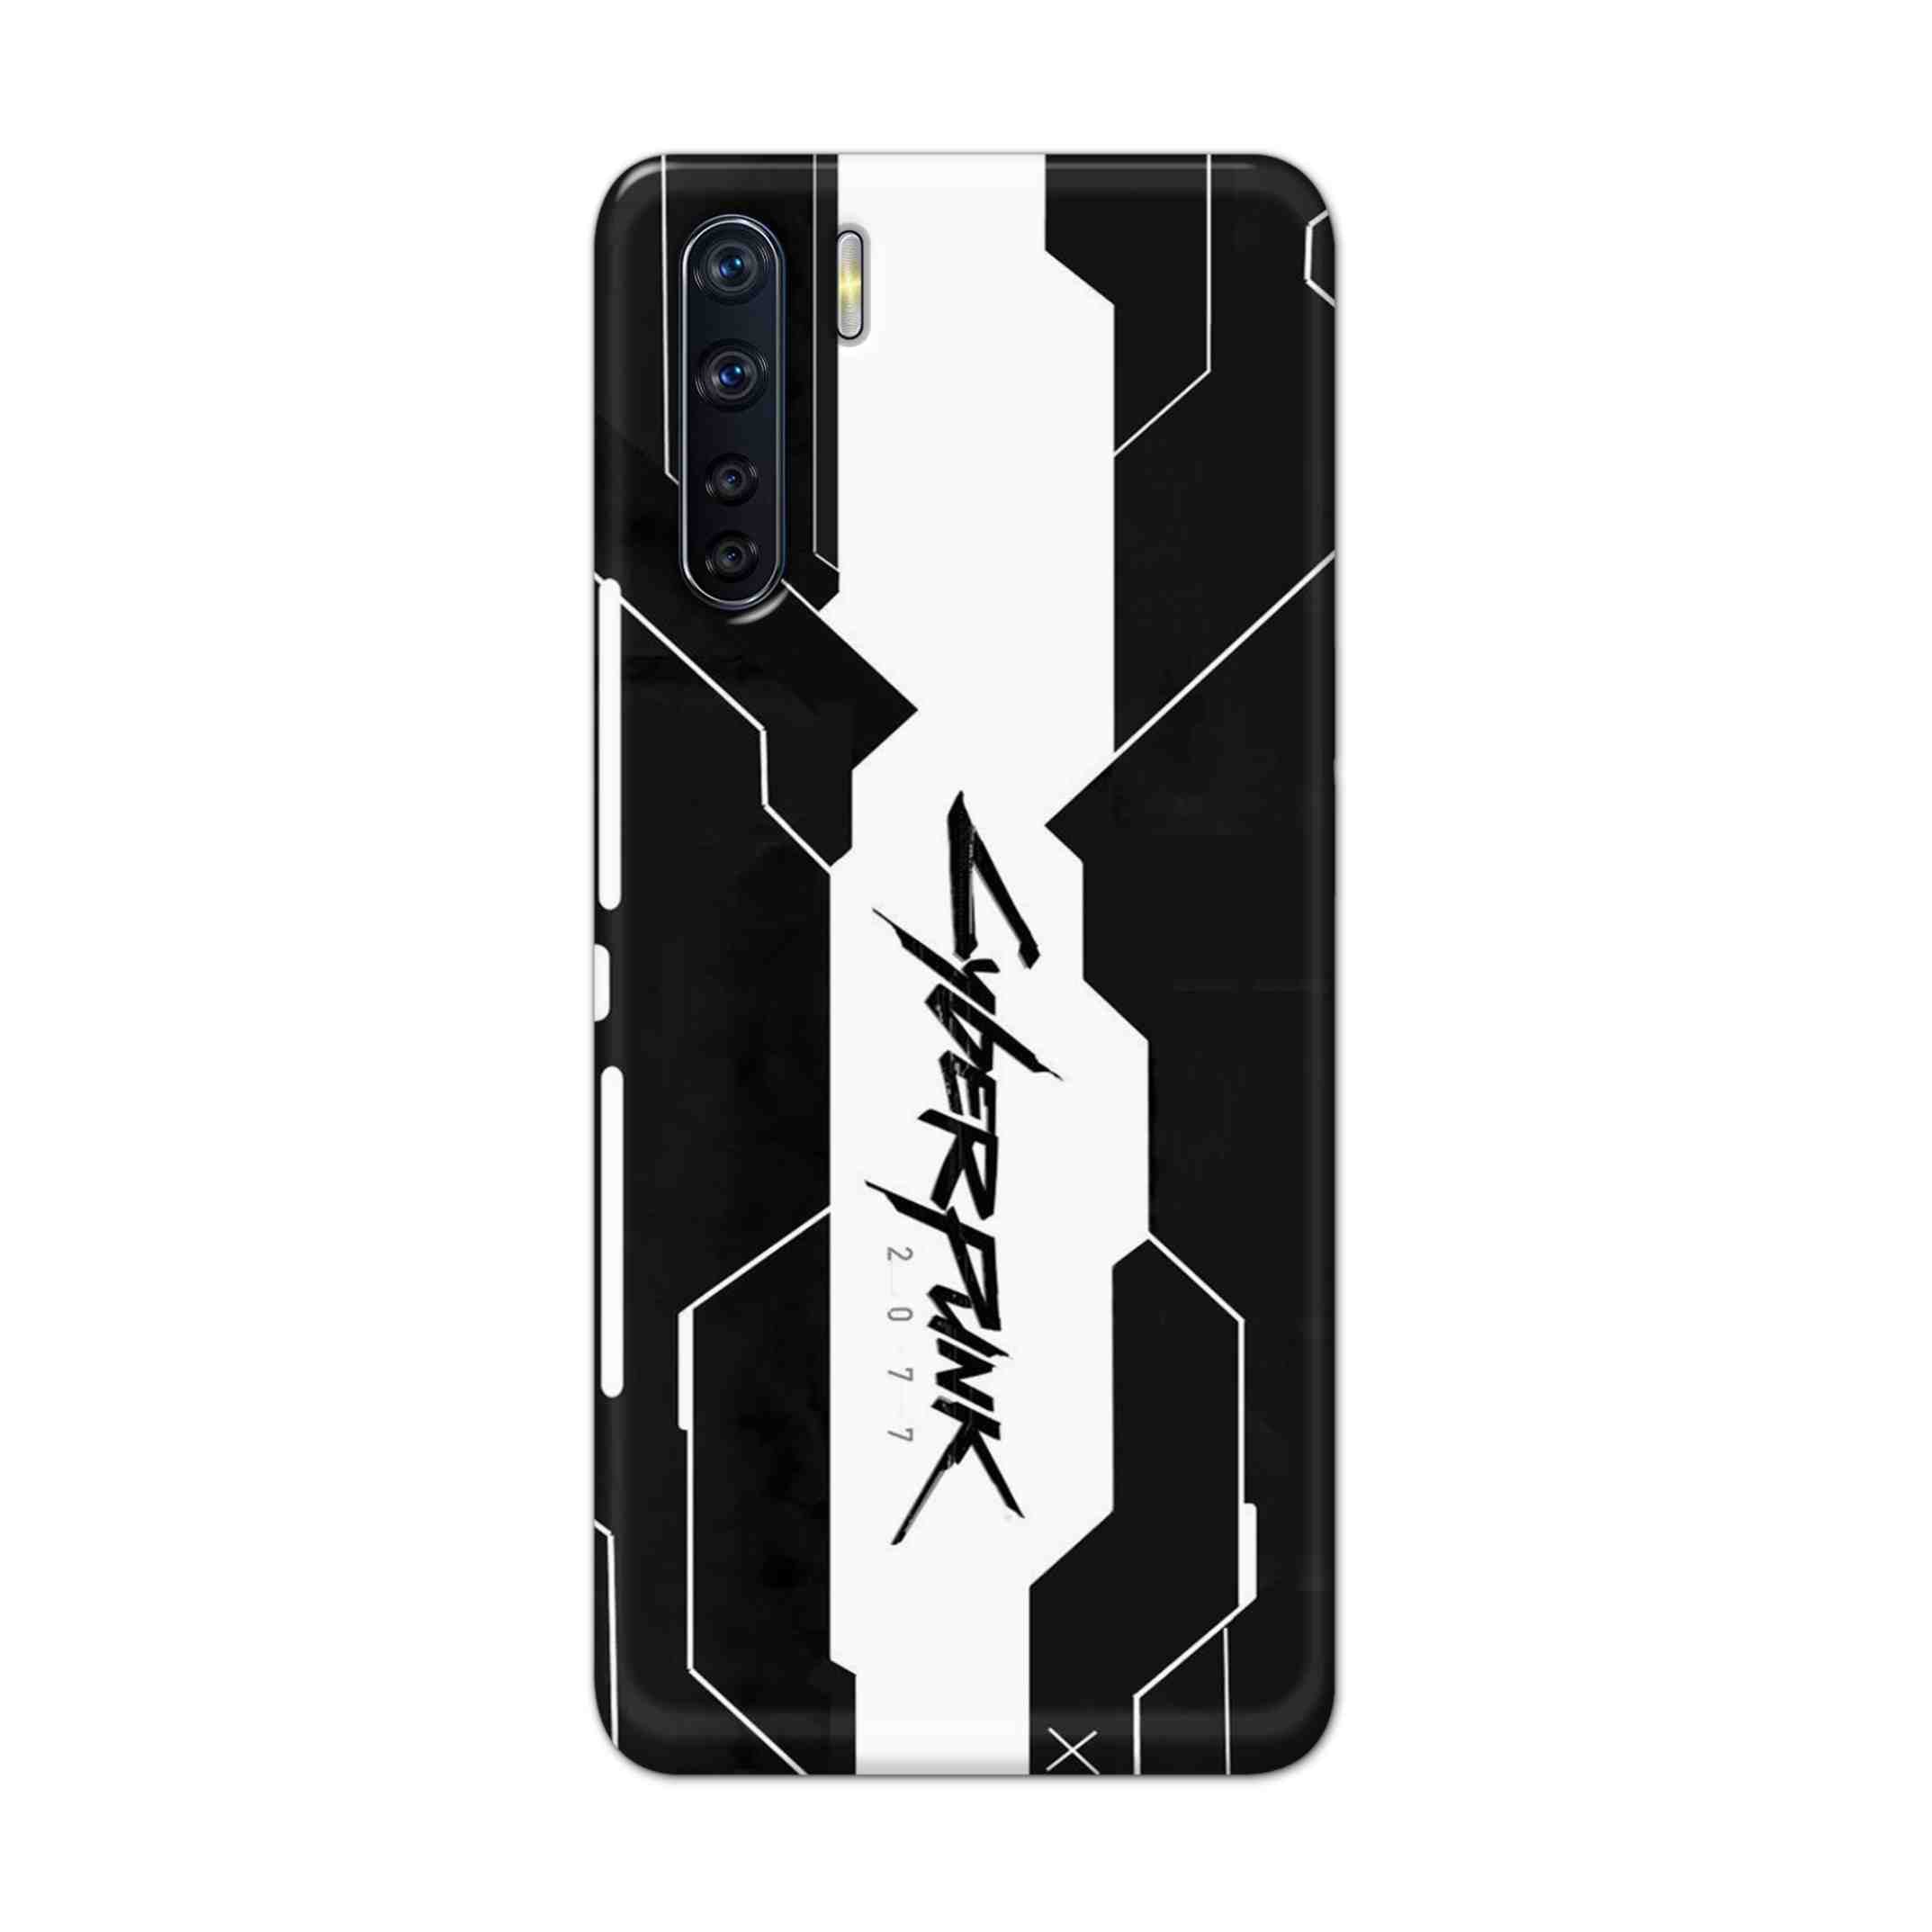 Buy Cyberpunk 2077 Art Hard Back Mobile Phone Case Cover For OPPO F15 Online